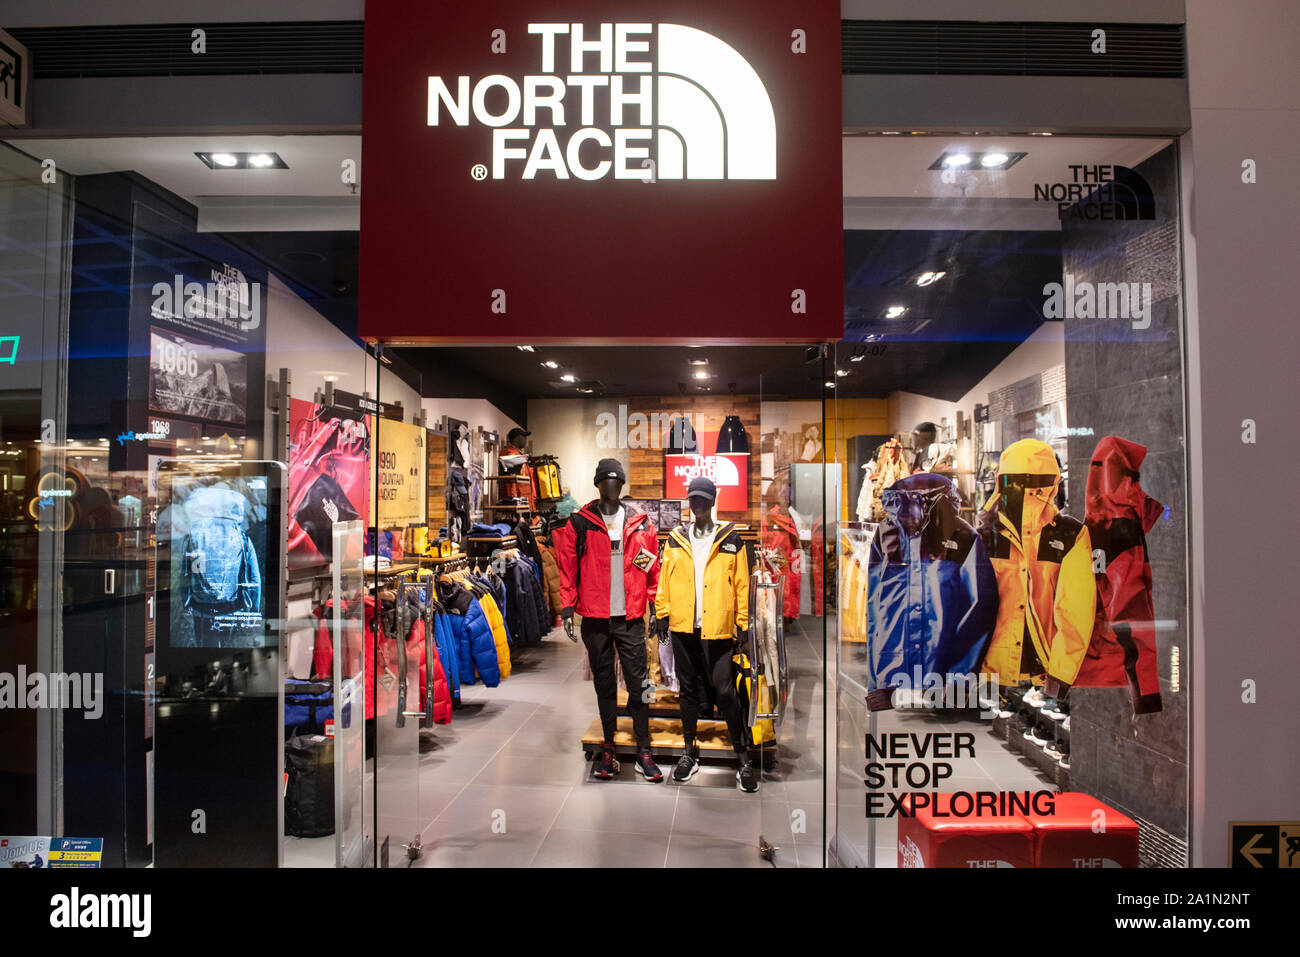 North face outdoor clothing store -Fotos und -Bildmaterial in hoher  Auflösung – Alamy